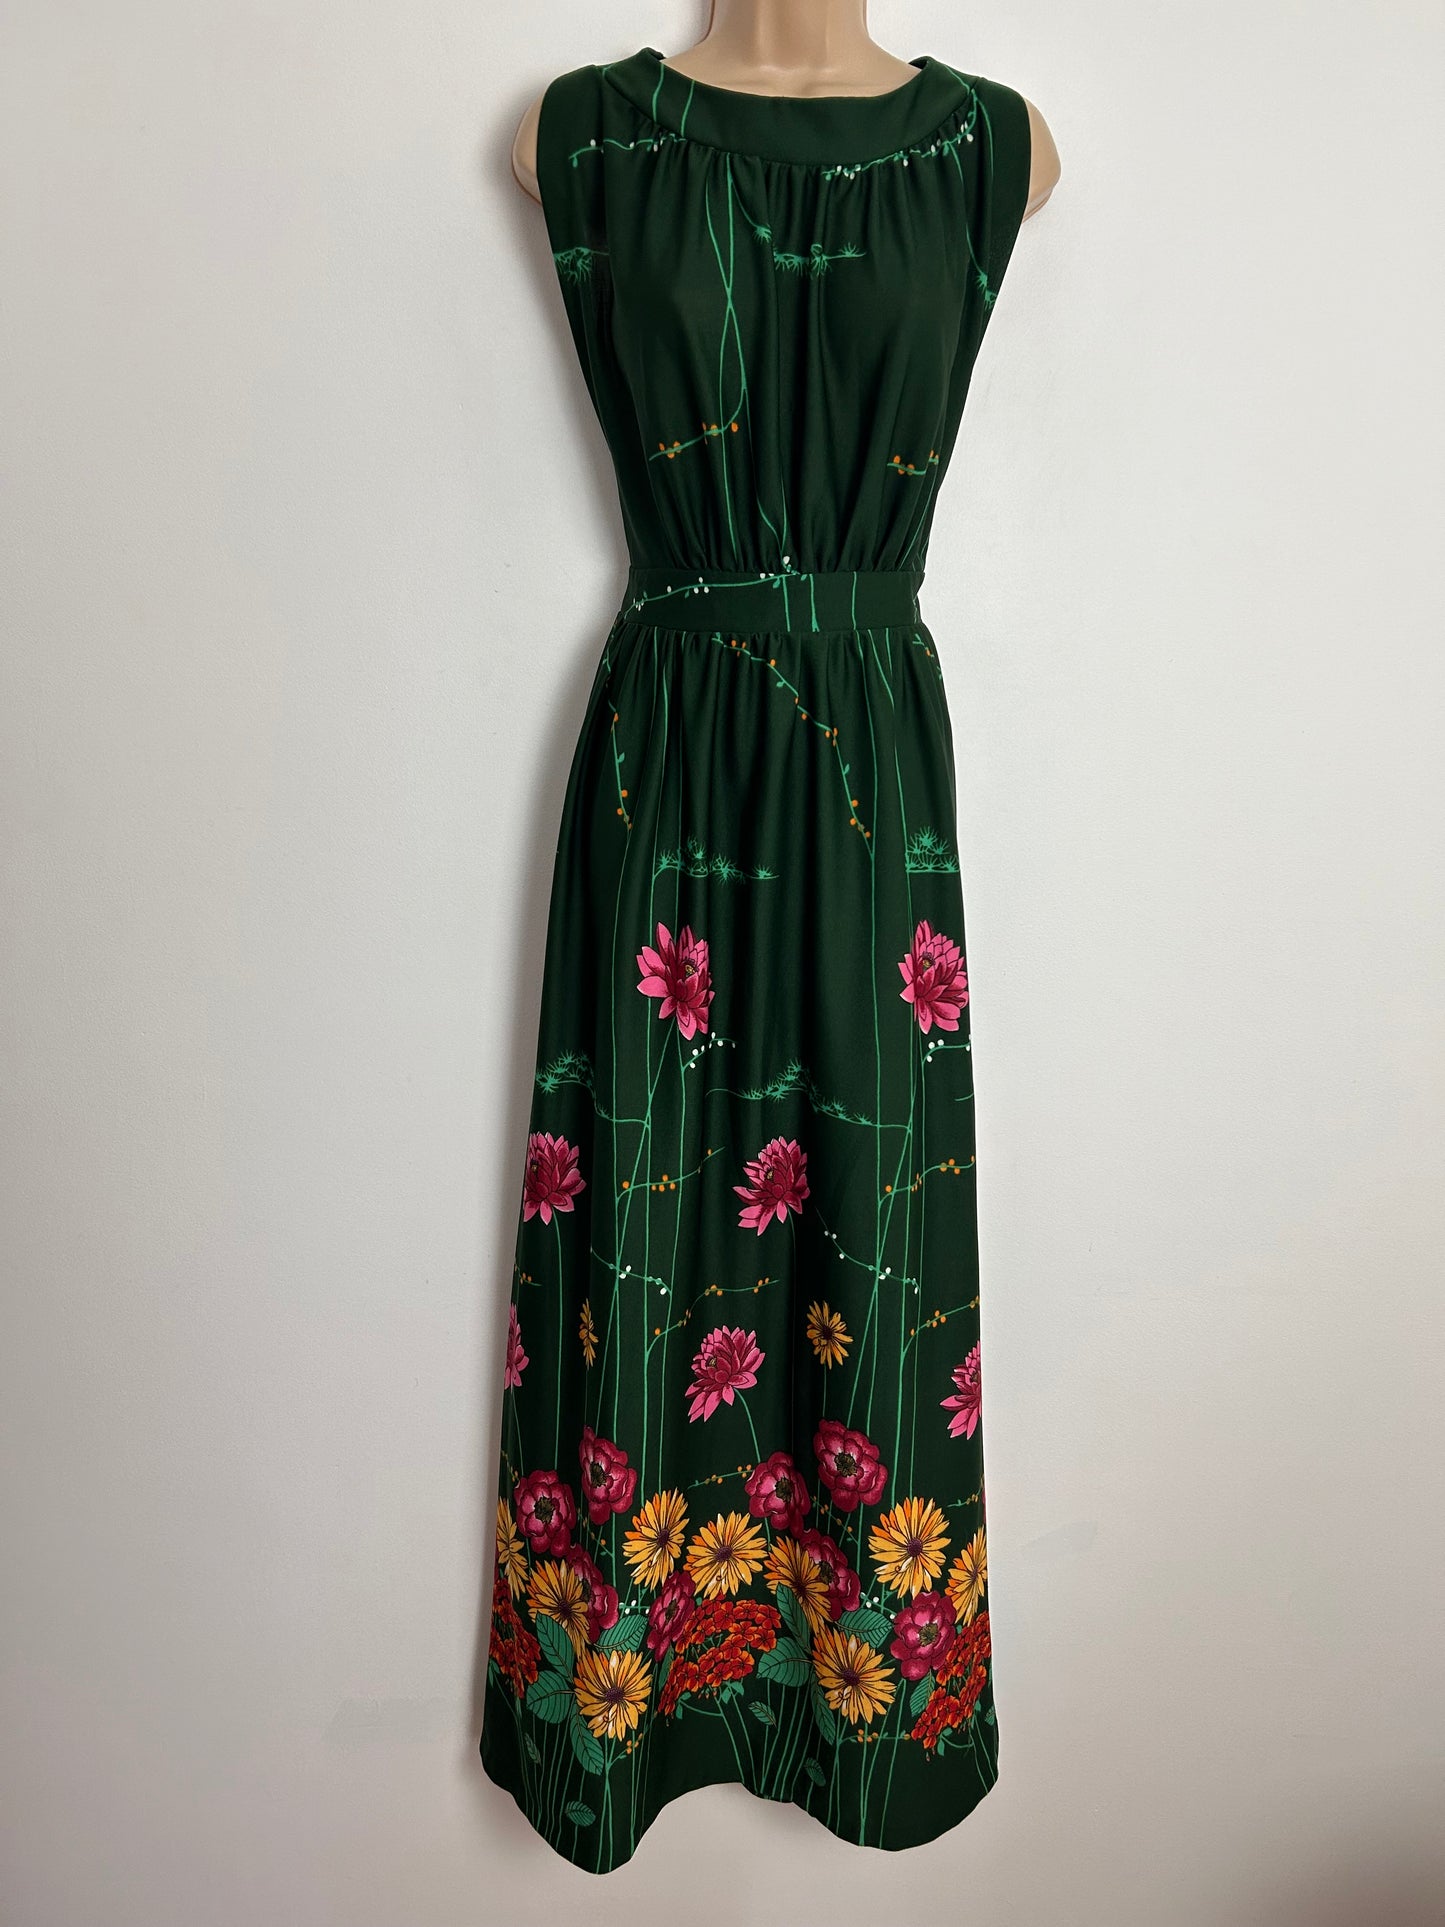 Vintage 1970s UK Size 12 Dark Green Pink & Orange Floral Print Sleeveless Maxi Dress